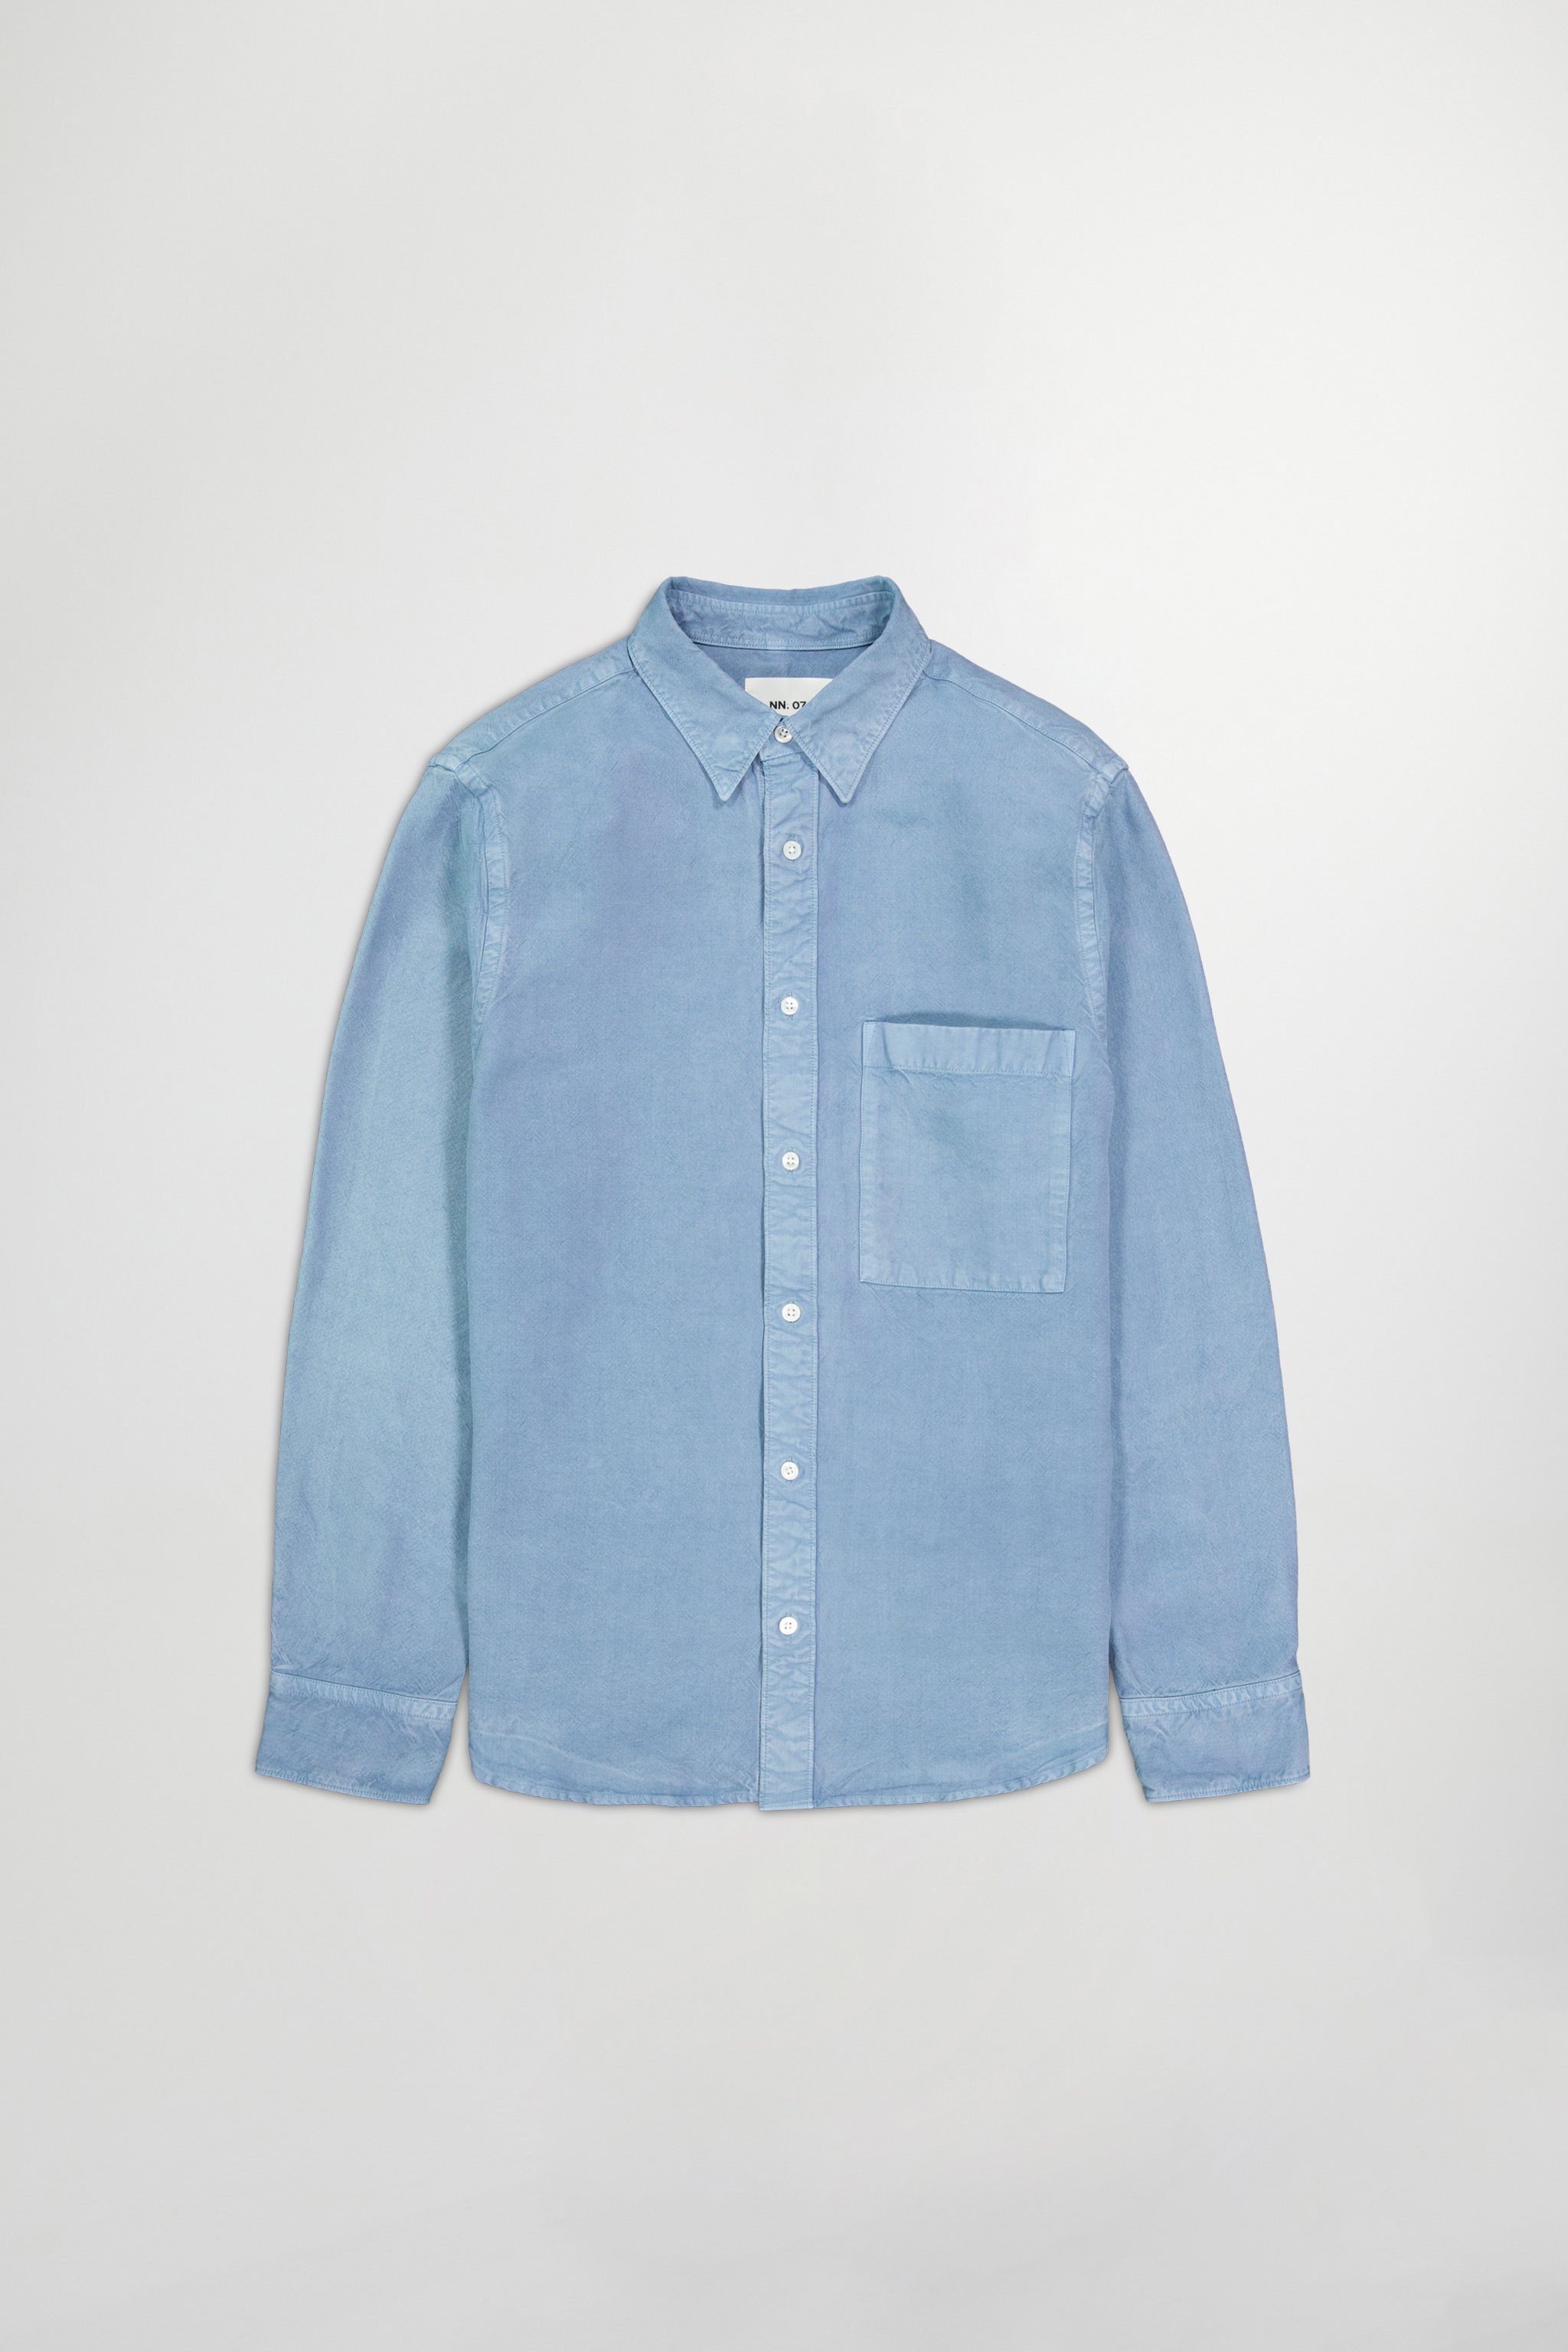 Cohen 5213 shirt at online men\'s - Buy Blue 